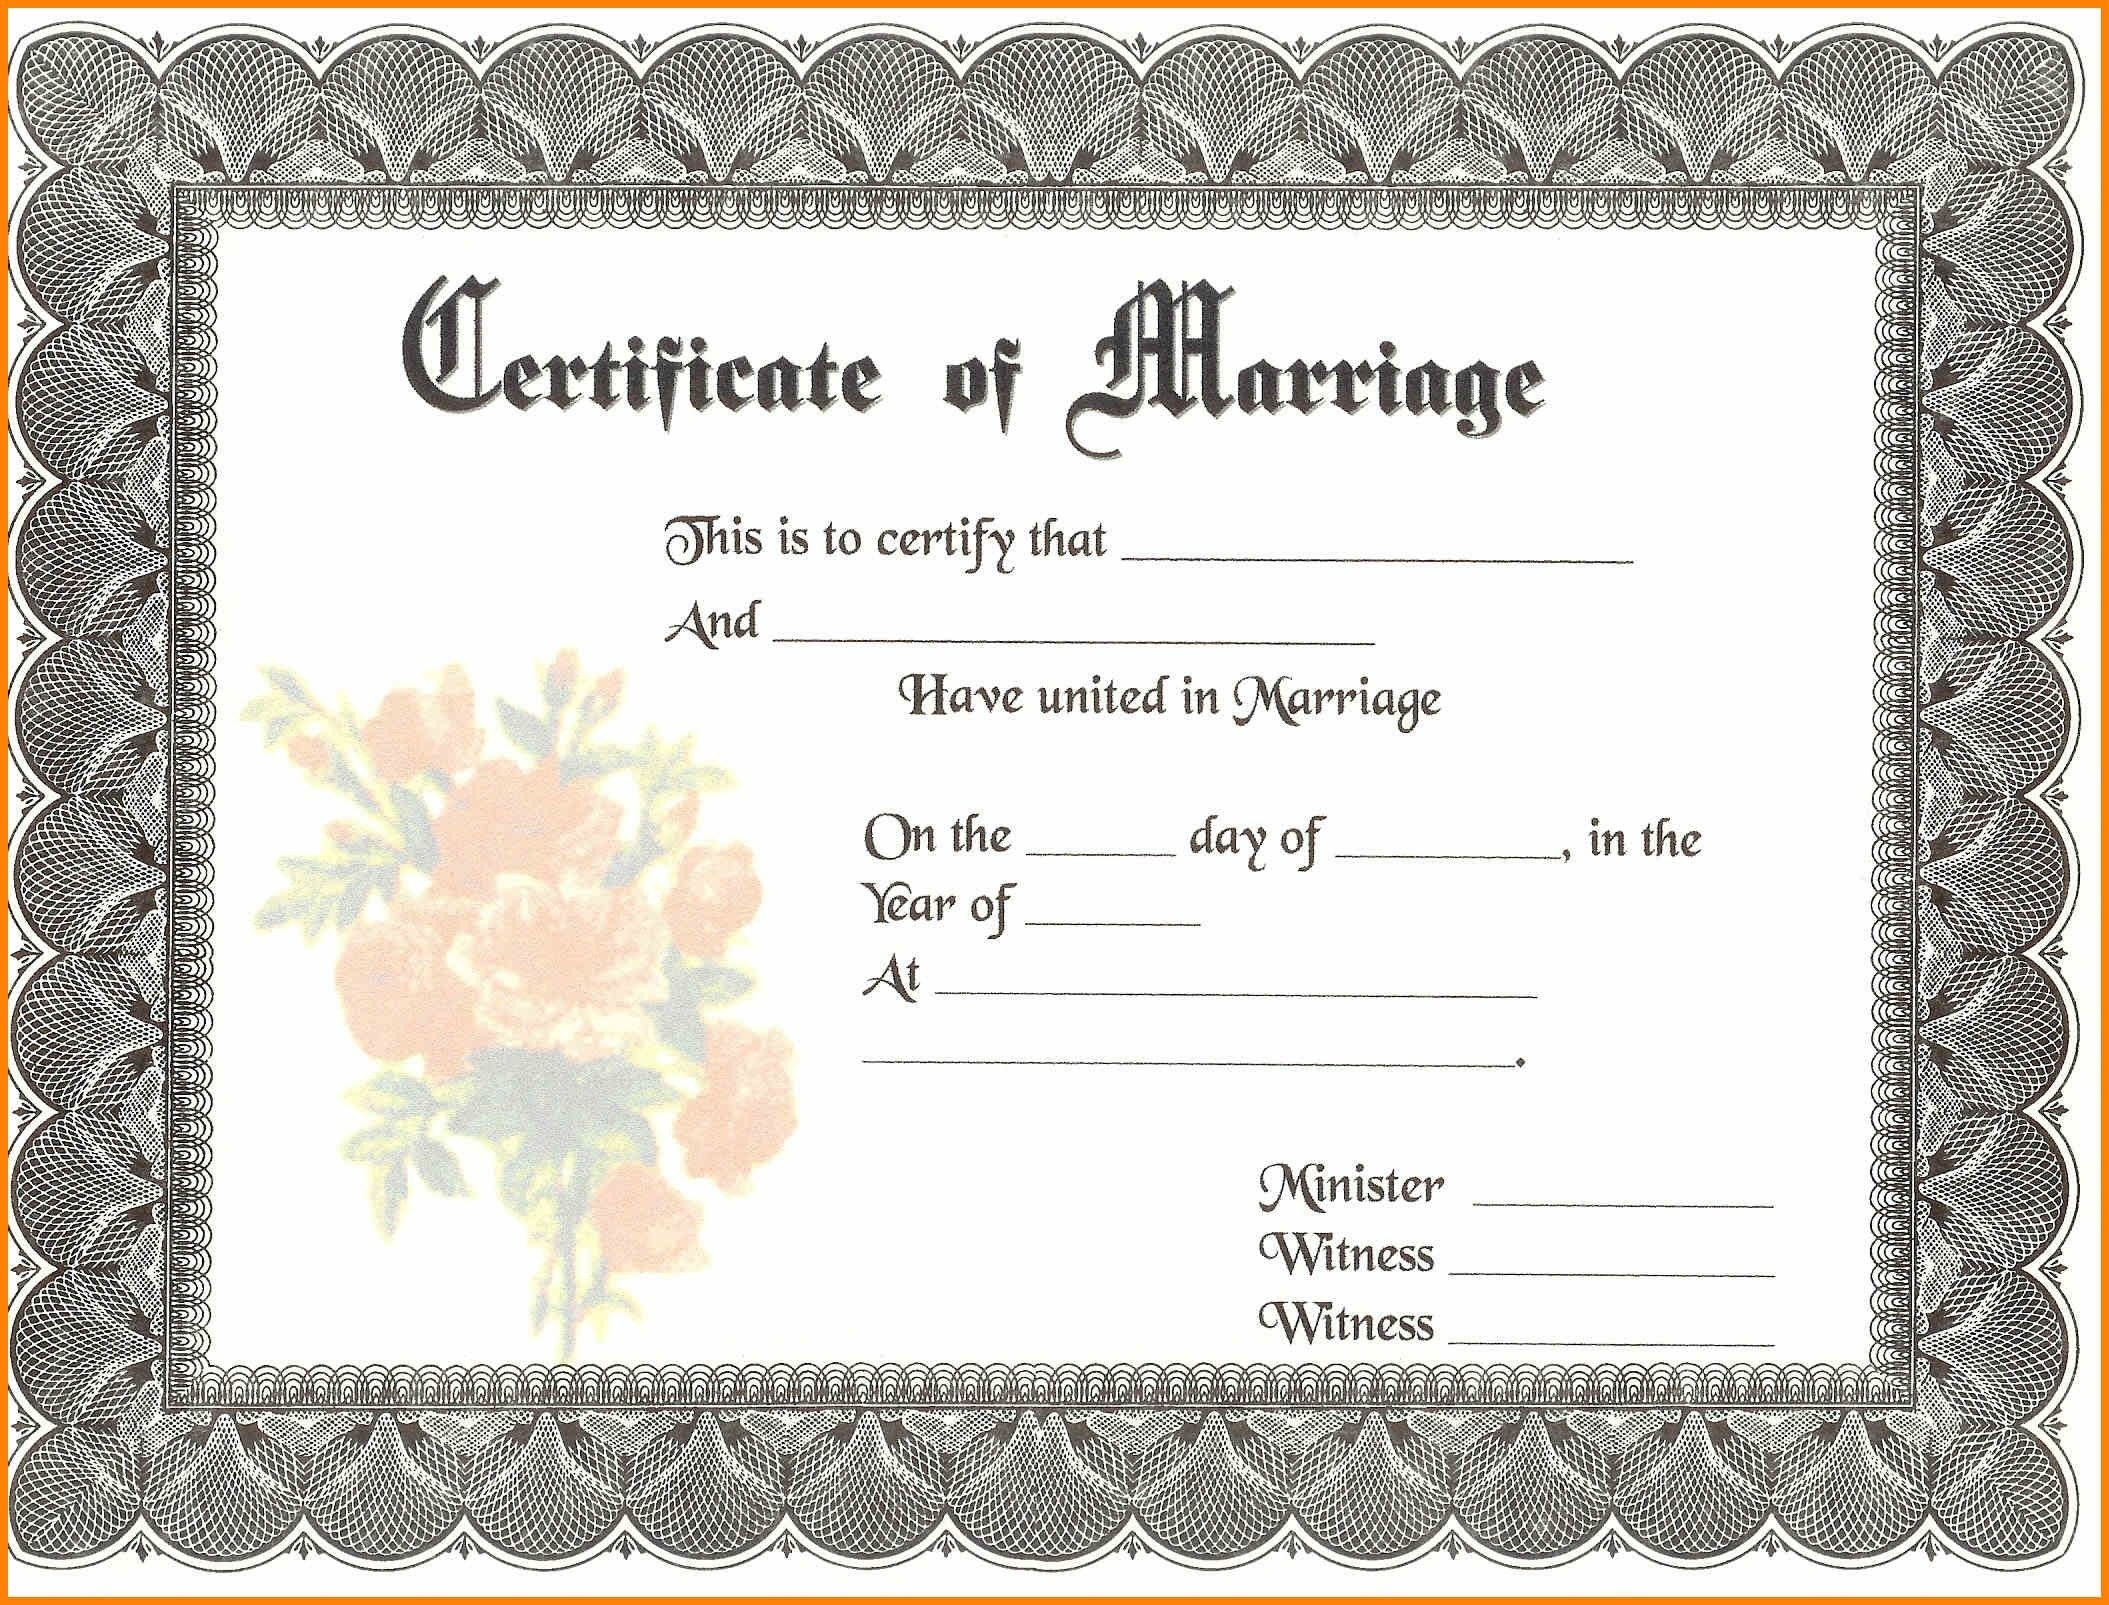 Get Fake Marriage Certificates Online Buy Novelty Wedding License Wedding Certificate Gift Certificate Template Gift Certificate Template Word - Fake Marriage Certificate Printable Free